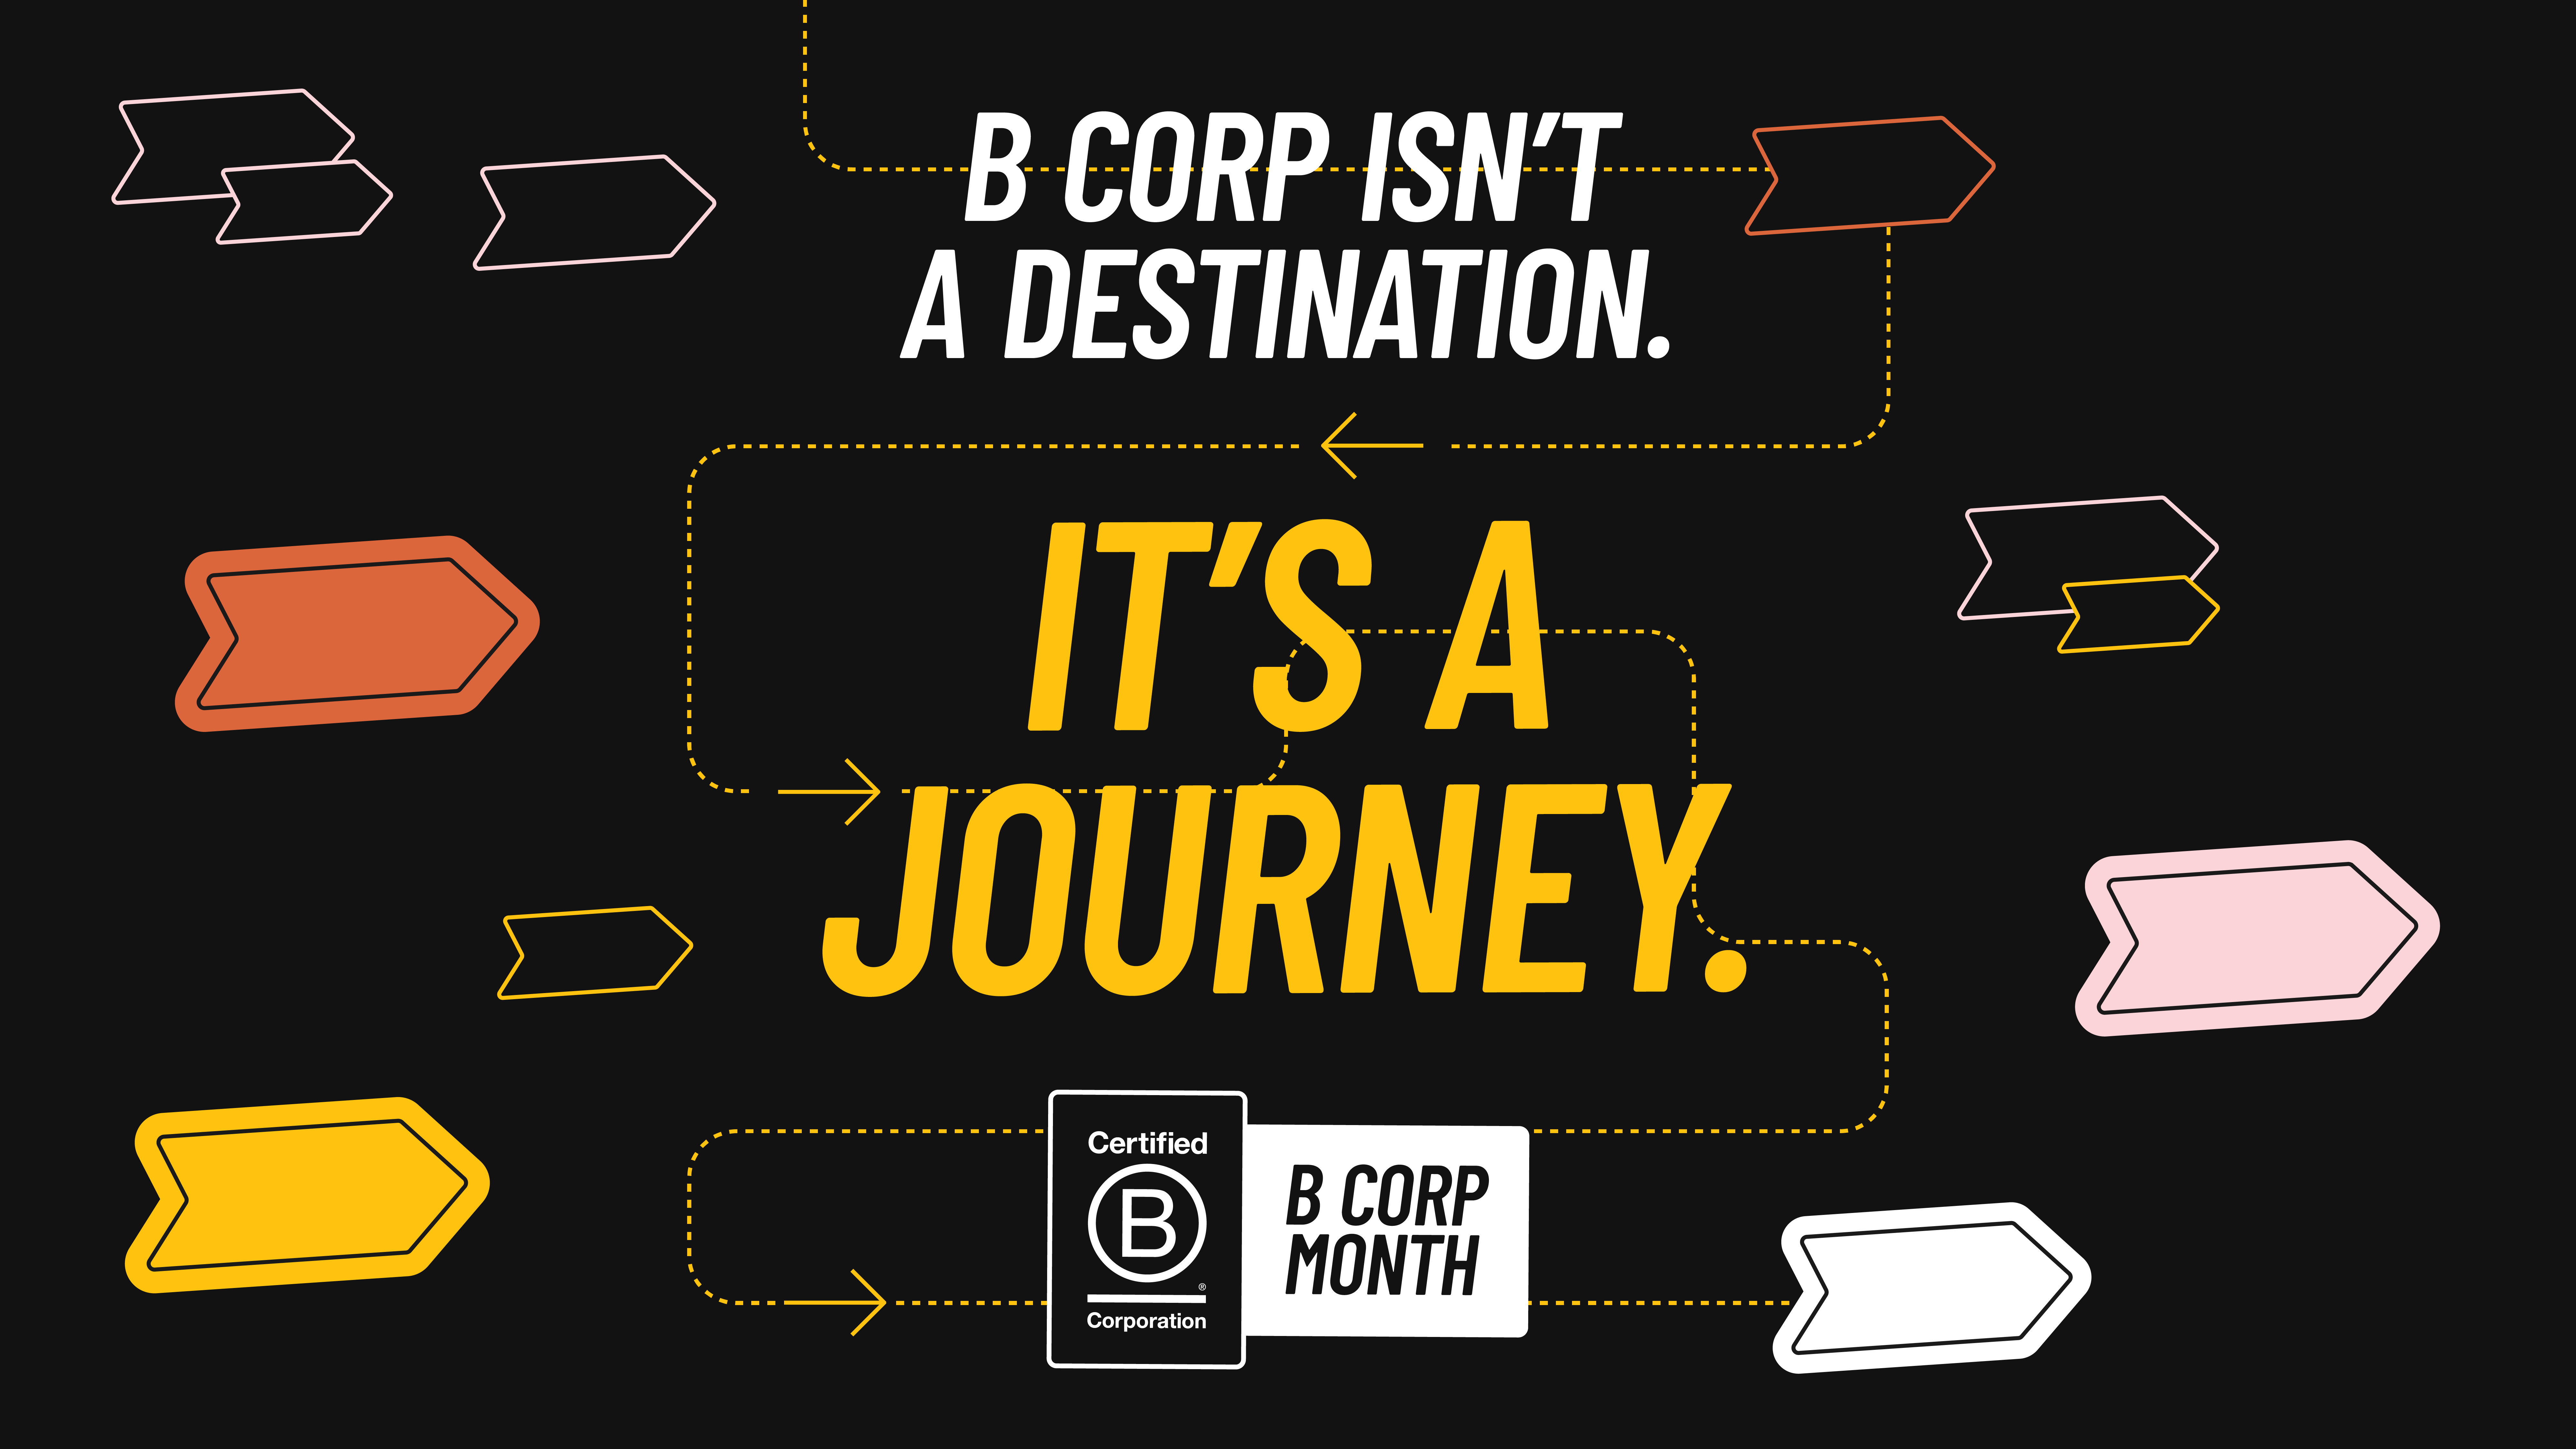 B Corp isn't a destination, it's a journey